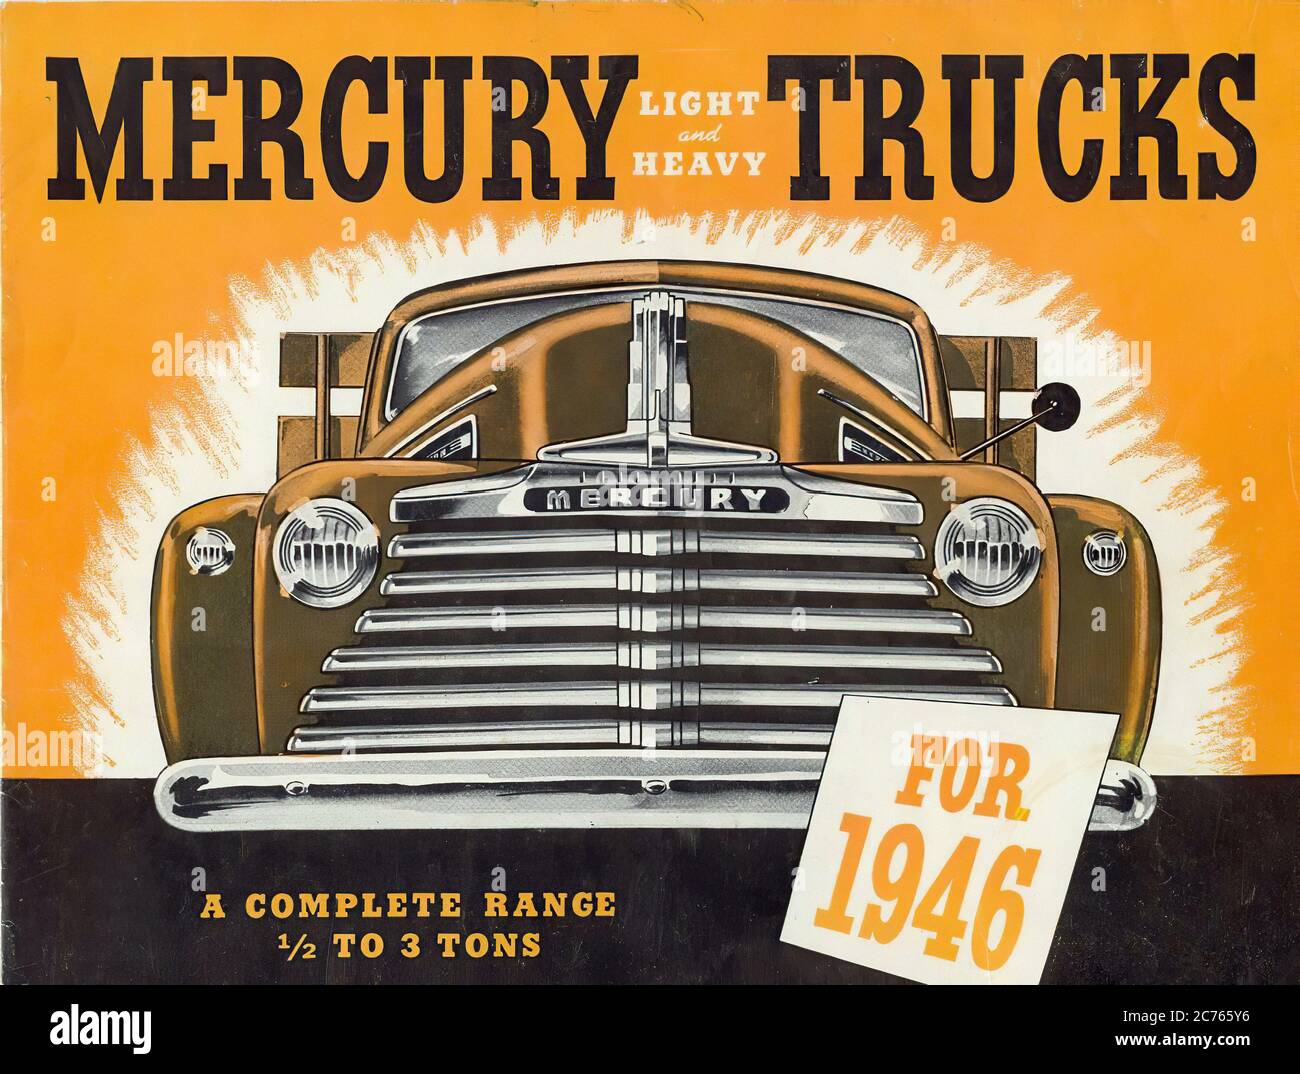 Mercury Trucks  From 1946 - Vintage car advertising Stock Photo